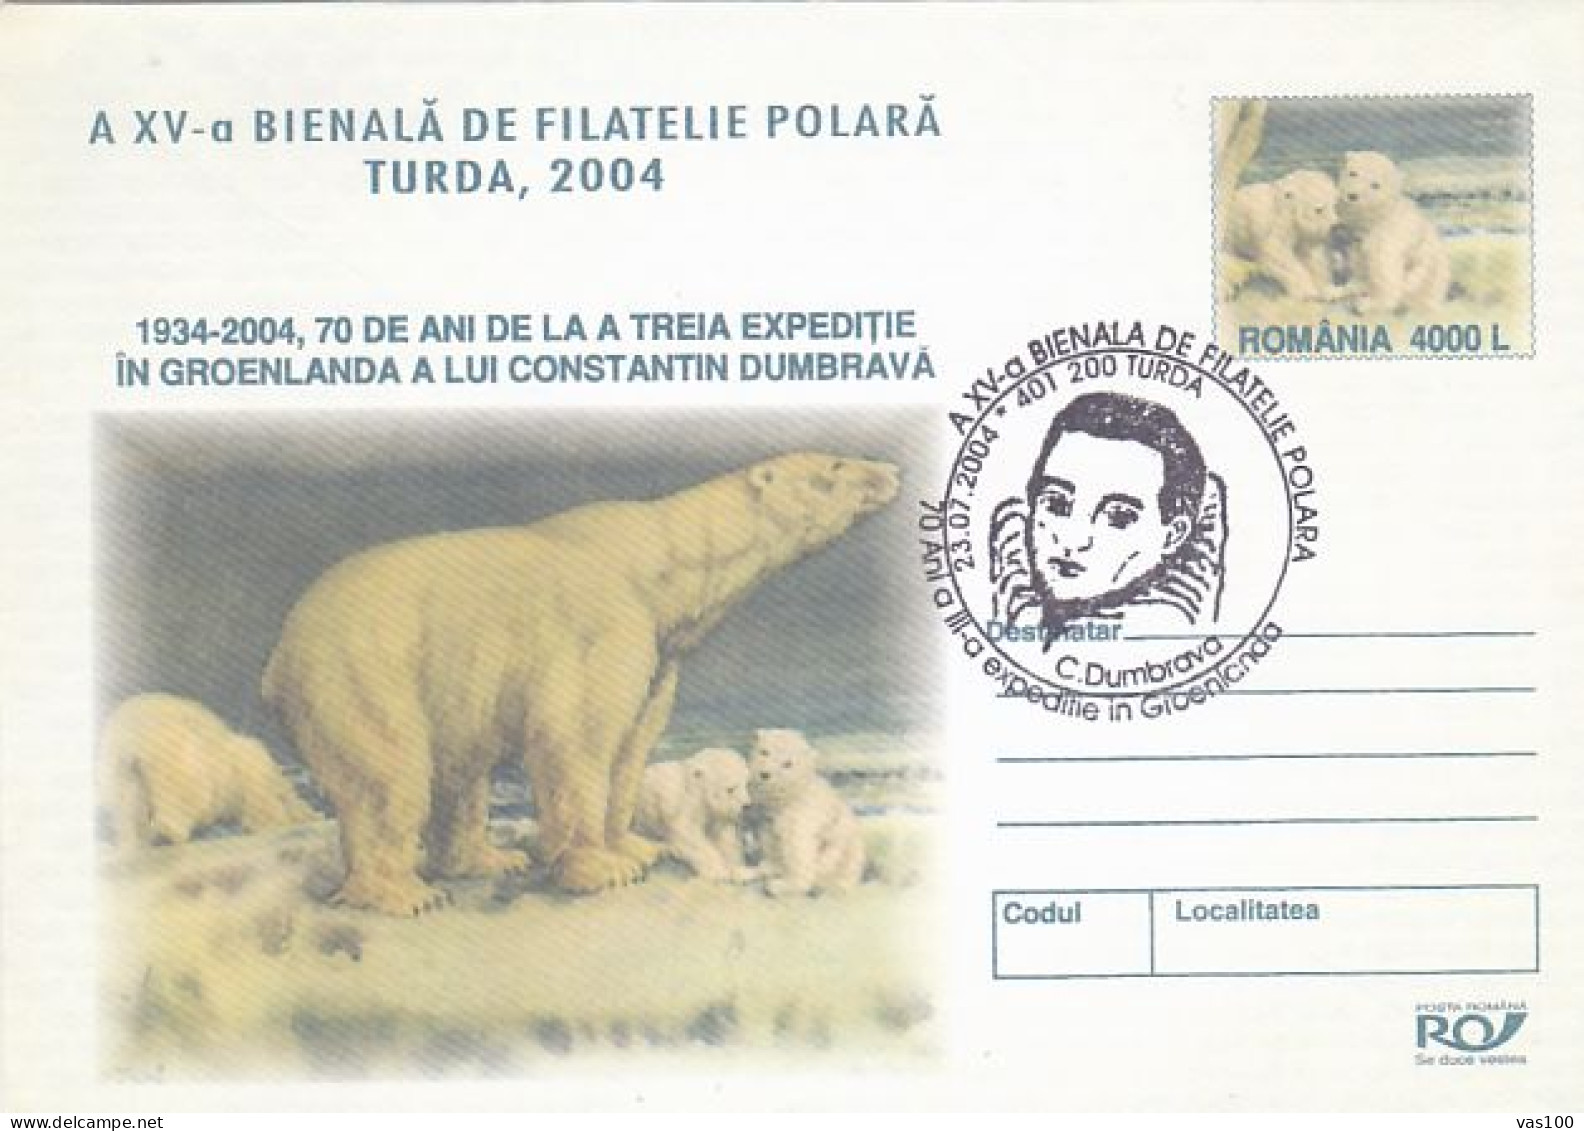 NORTH POLE, ARCTIC EXPEDITION, C. DUMBRAVA IN GREENLAND, POLAR BEAR, COVER STATIONERY, ENTIER POSTAL, 2004, ROMANIA - Expediciones árticas